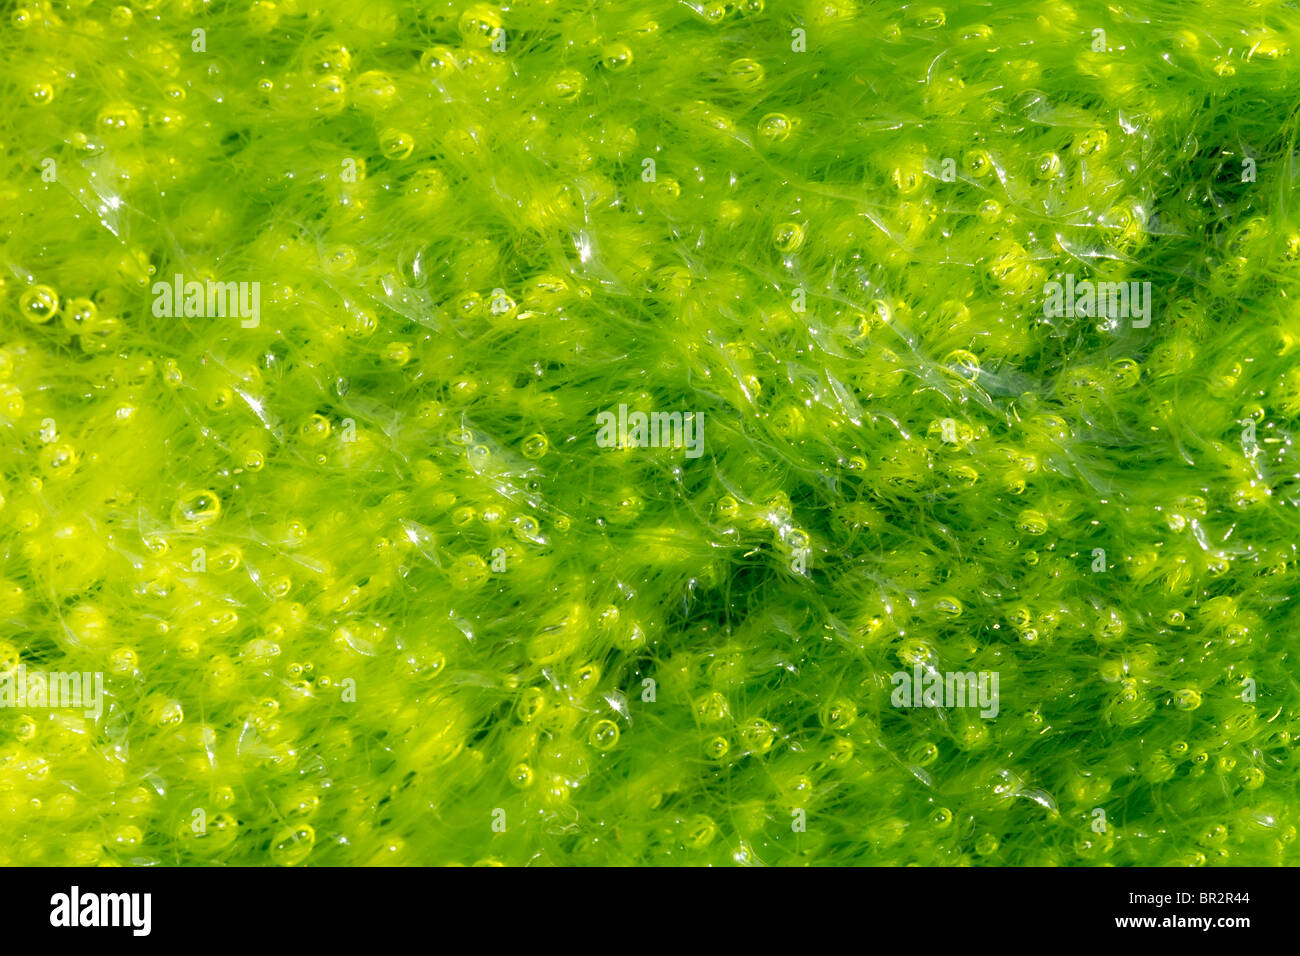 ulva alga background with bubbles at low tide Stock Photo